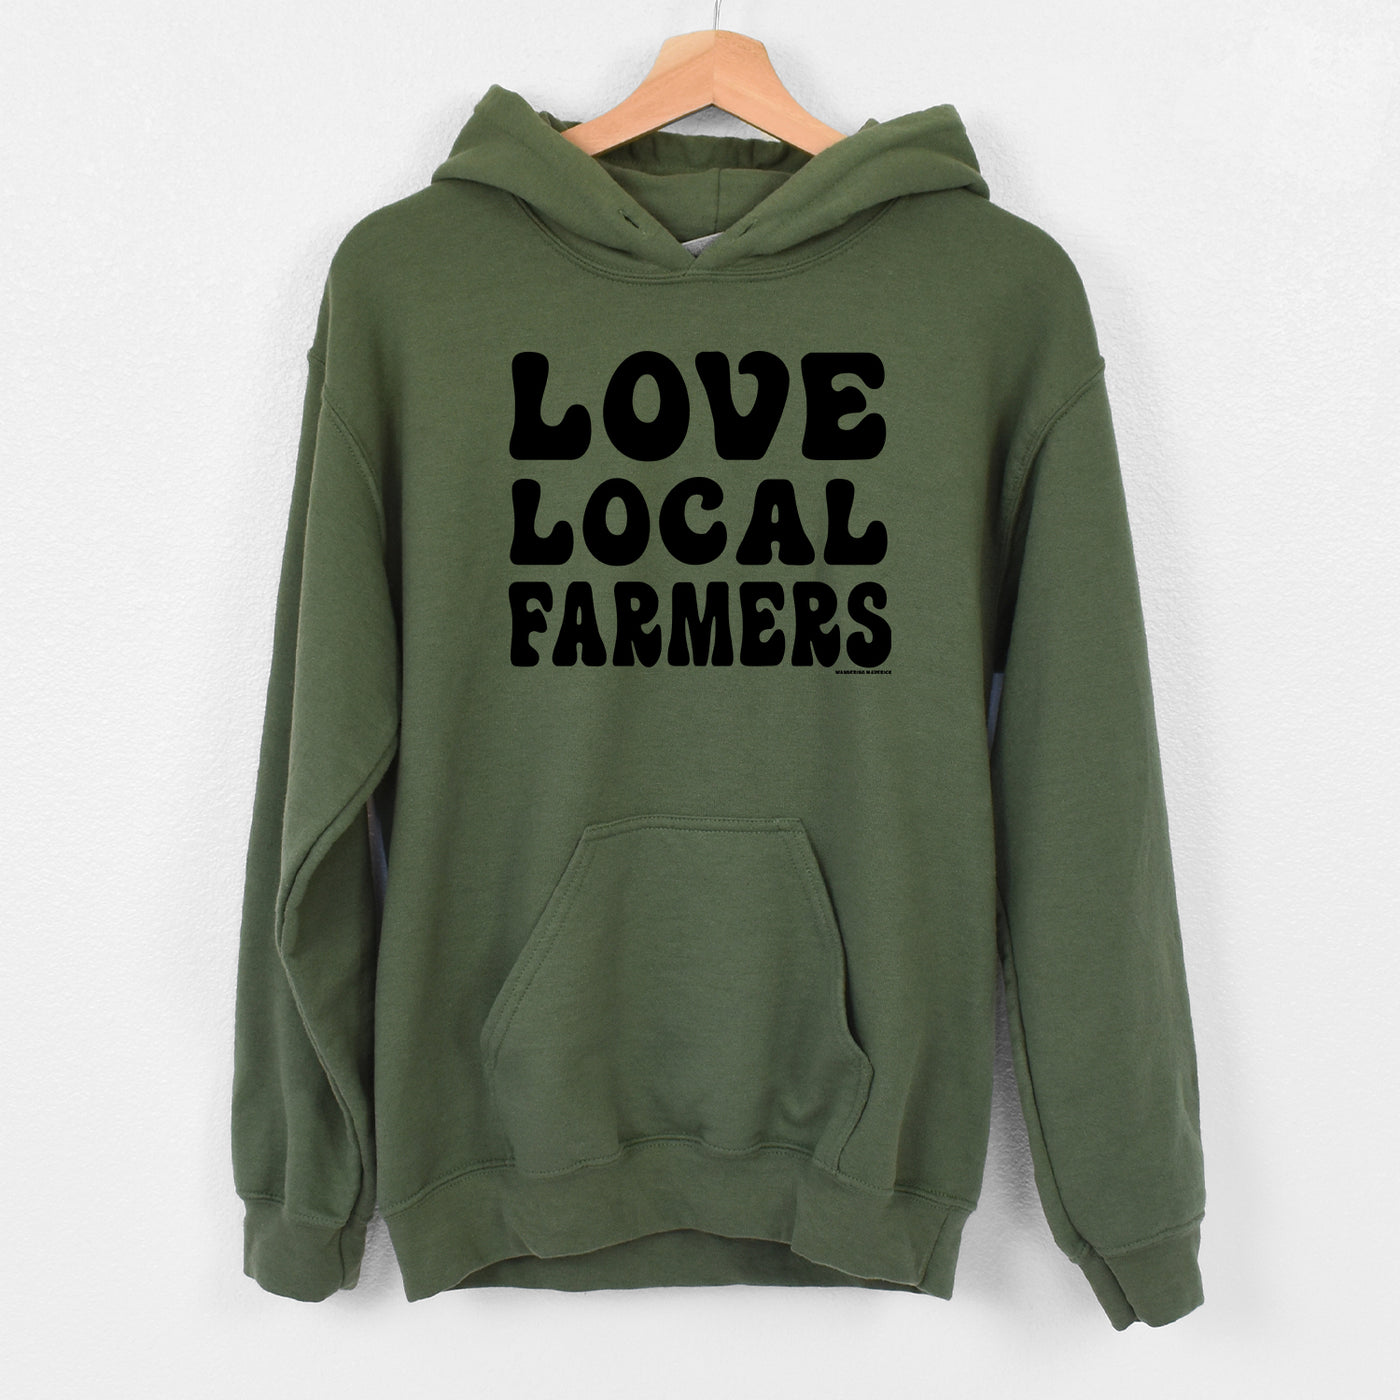 Love Local Farmers Black Ink Hoodie (S-3XL) Unisex - Multiple Colors!